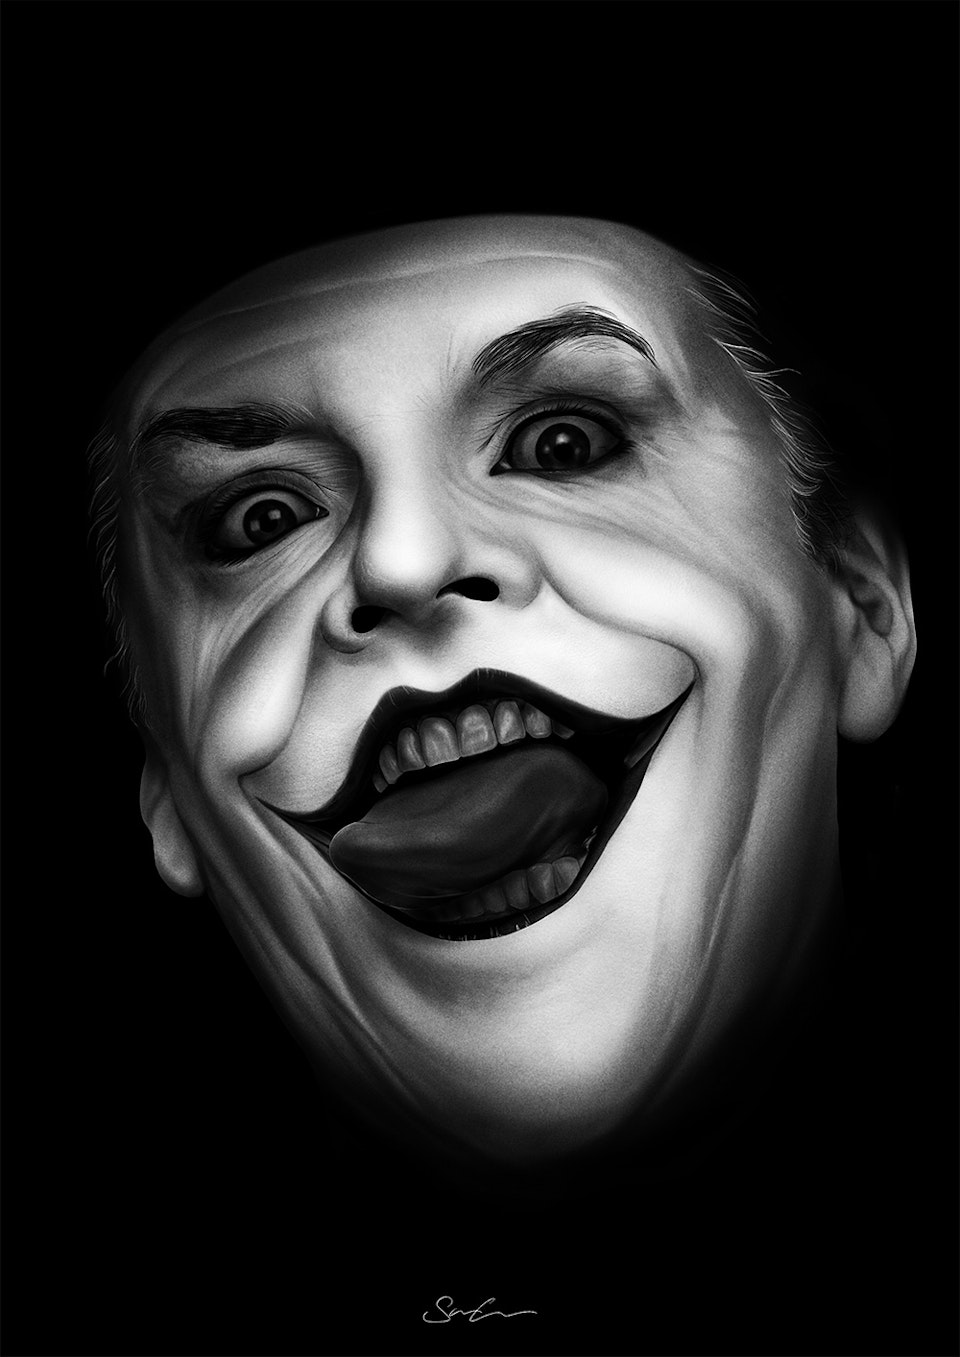 The Three Jokers - Joker - Jack Nicholson 
from Batman (1989)